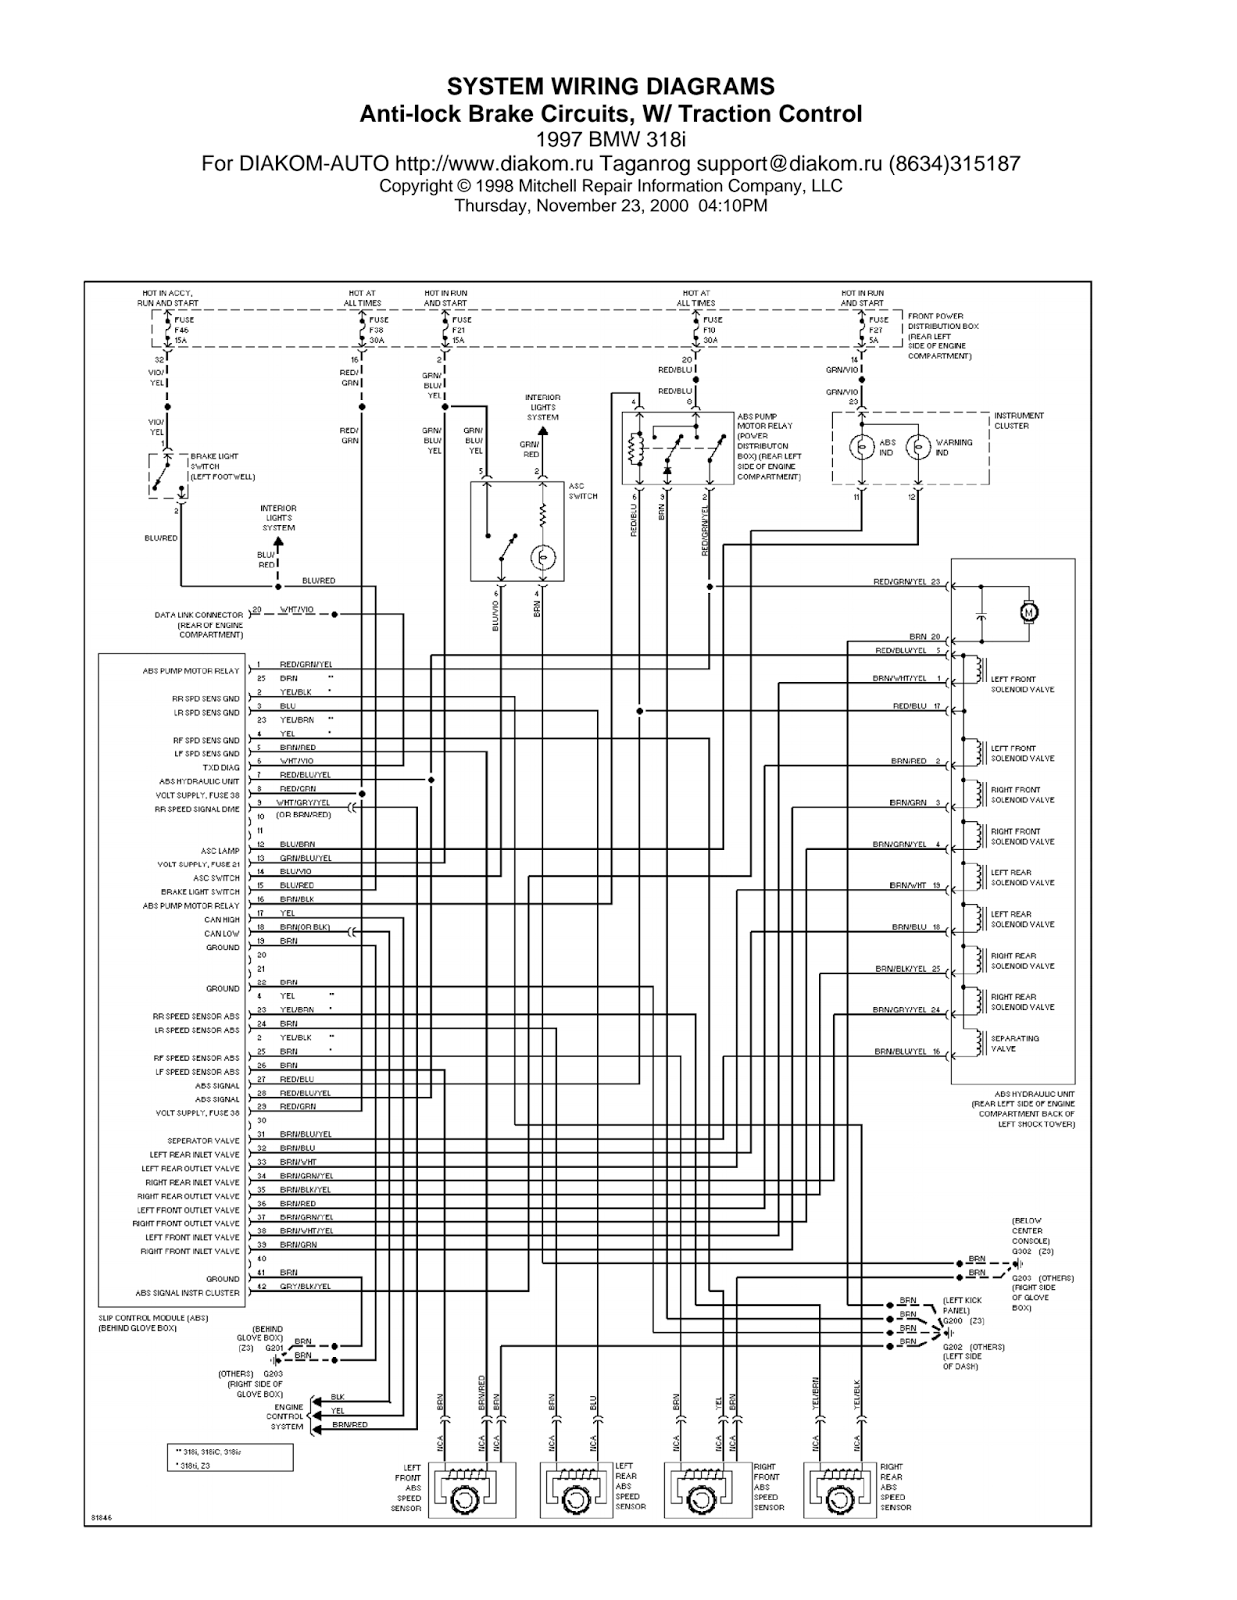 Wiring Diagrams And Free Manual Ebooks  1997 Bmw 318i Anti